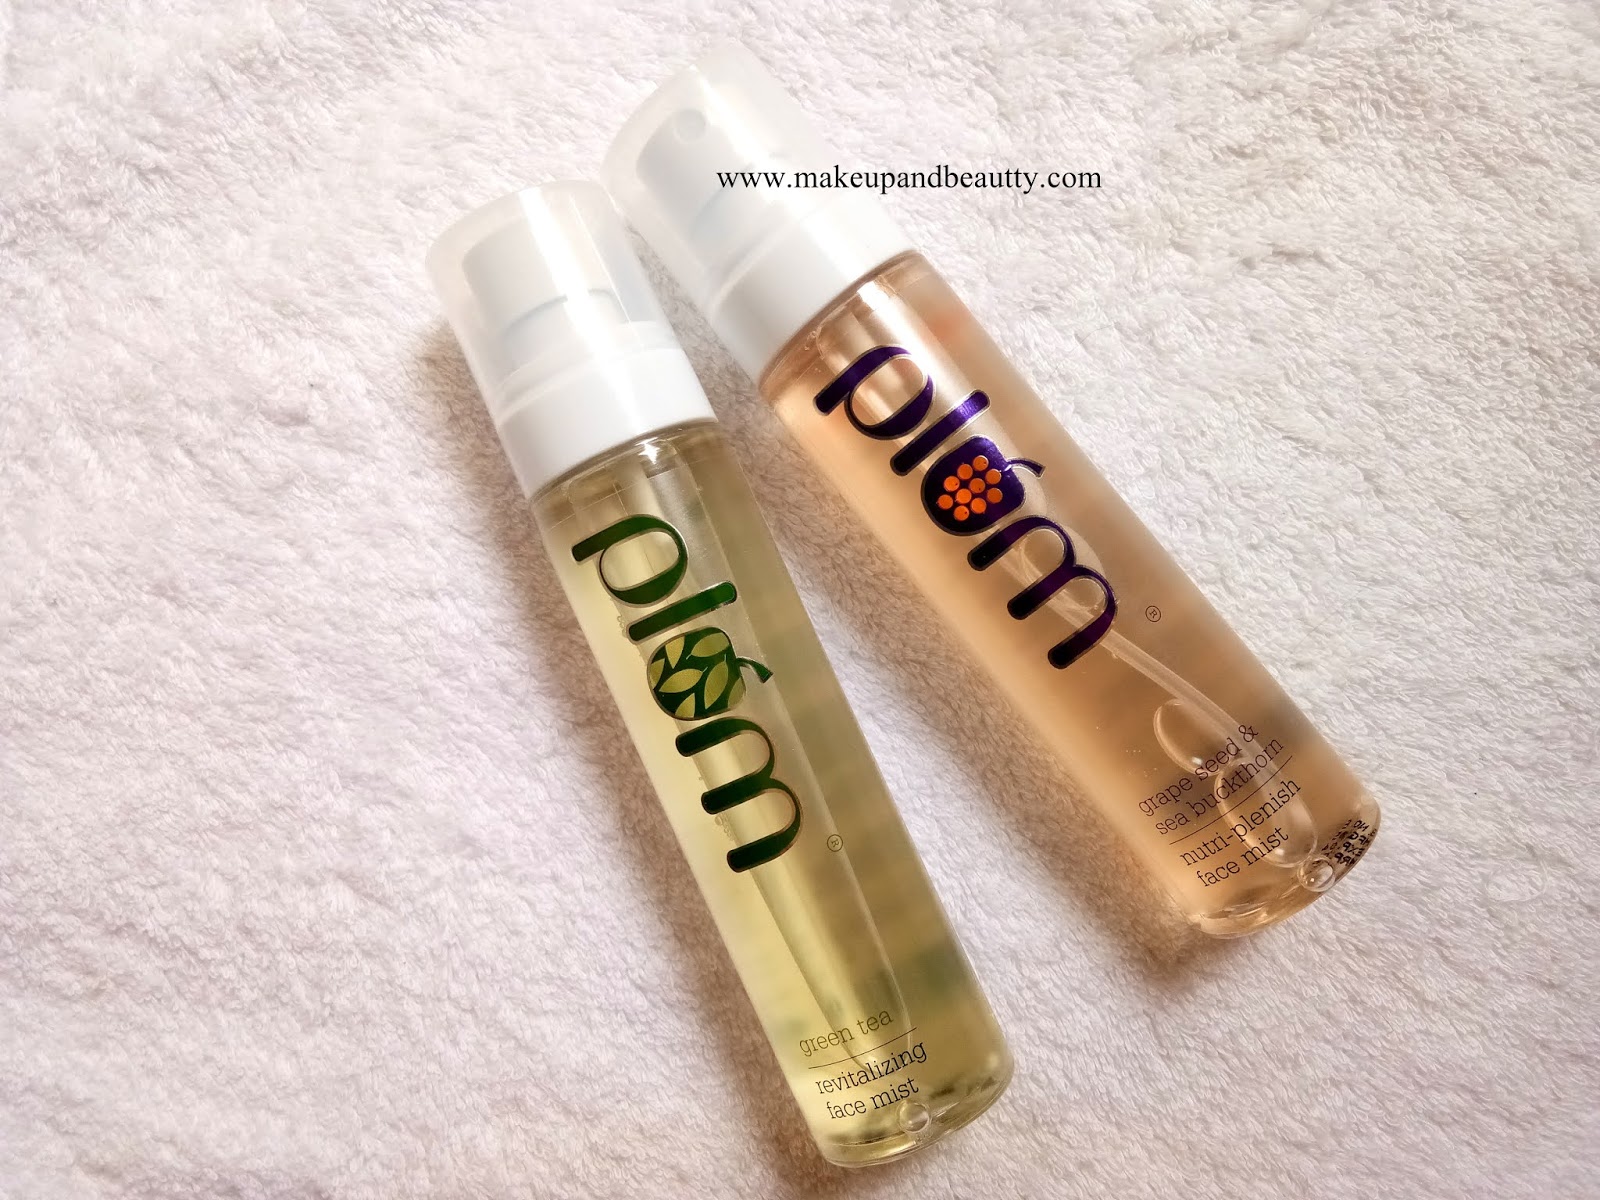 plum beauty personal hair trimmer reviews